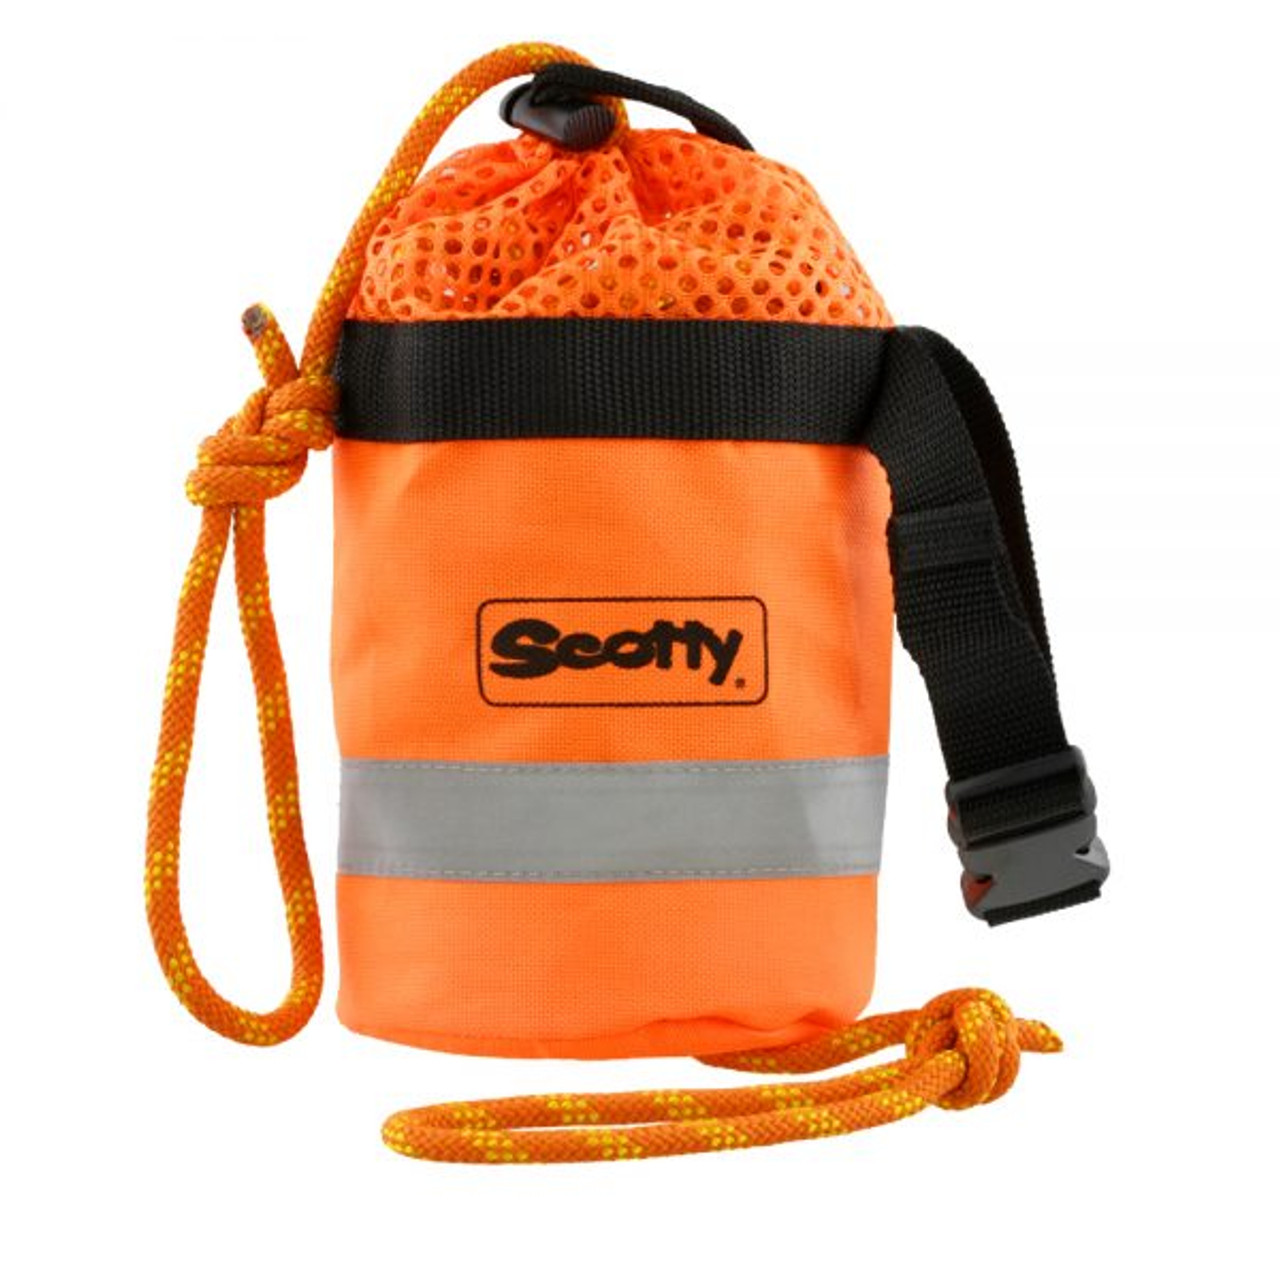 Scotty Rescue Throw Bags